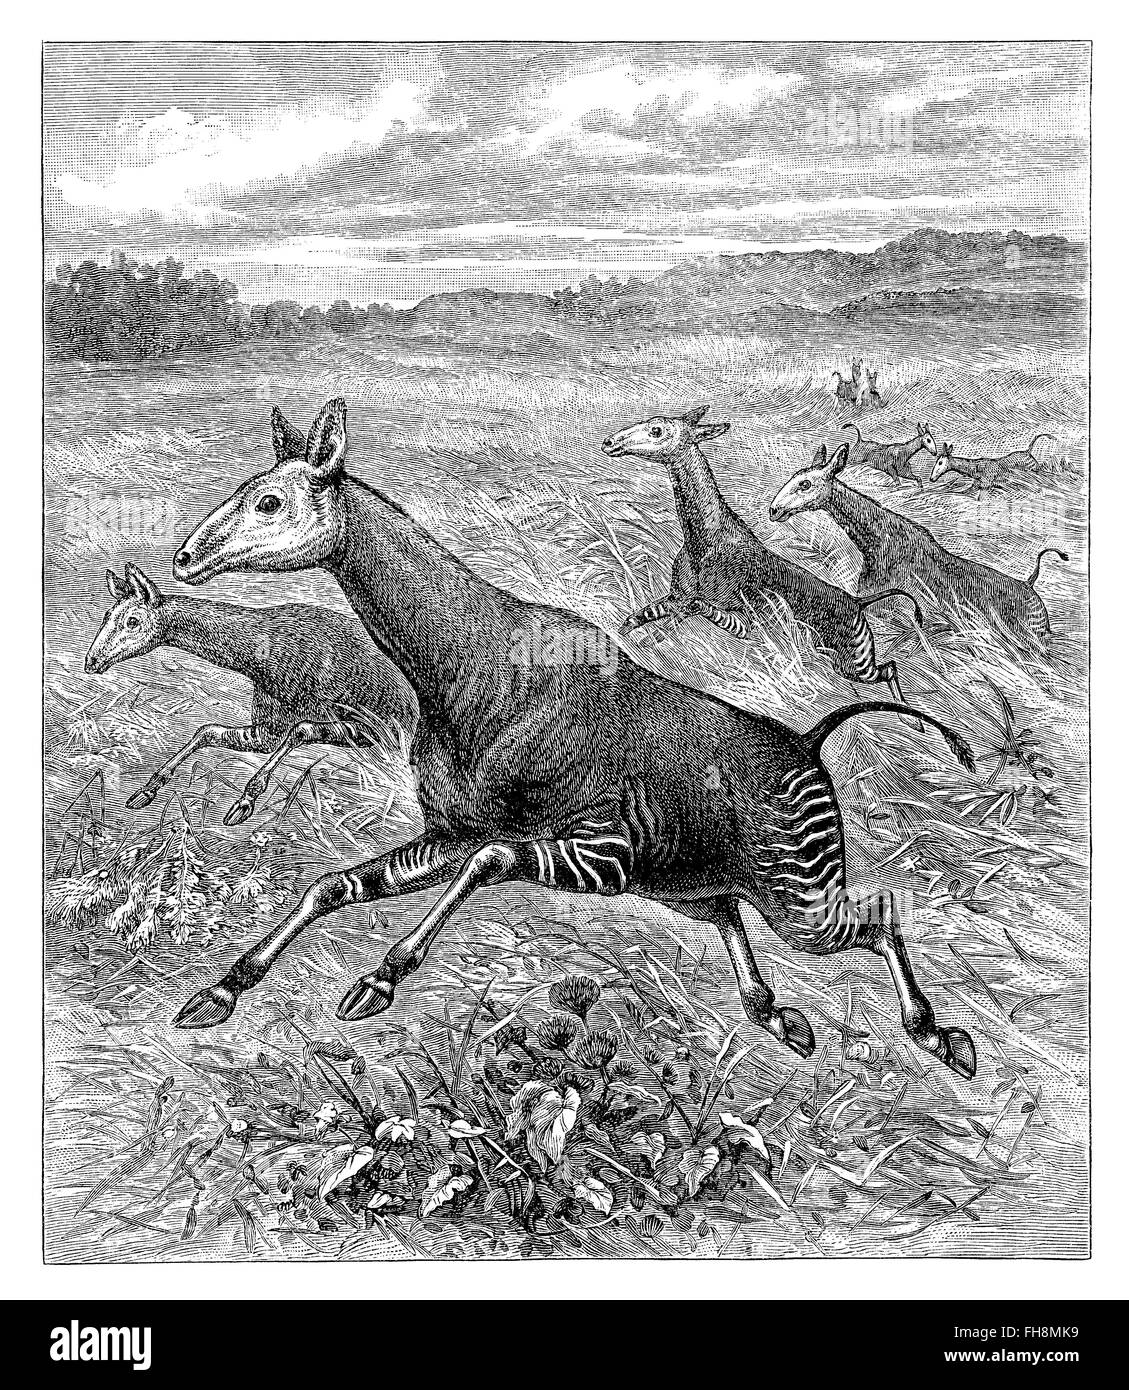 Black and white engraving of okapi (okapia johnstoni) in Africa. Stock Photo